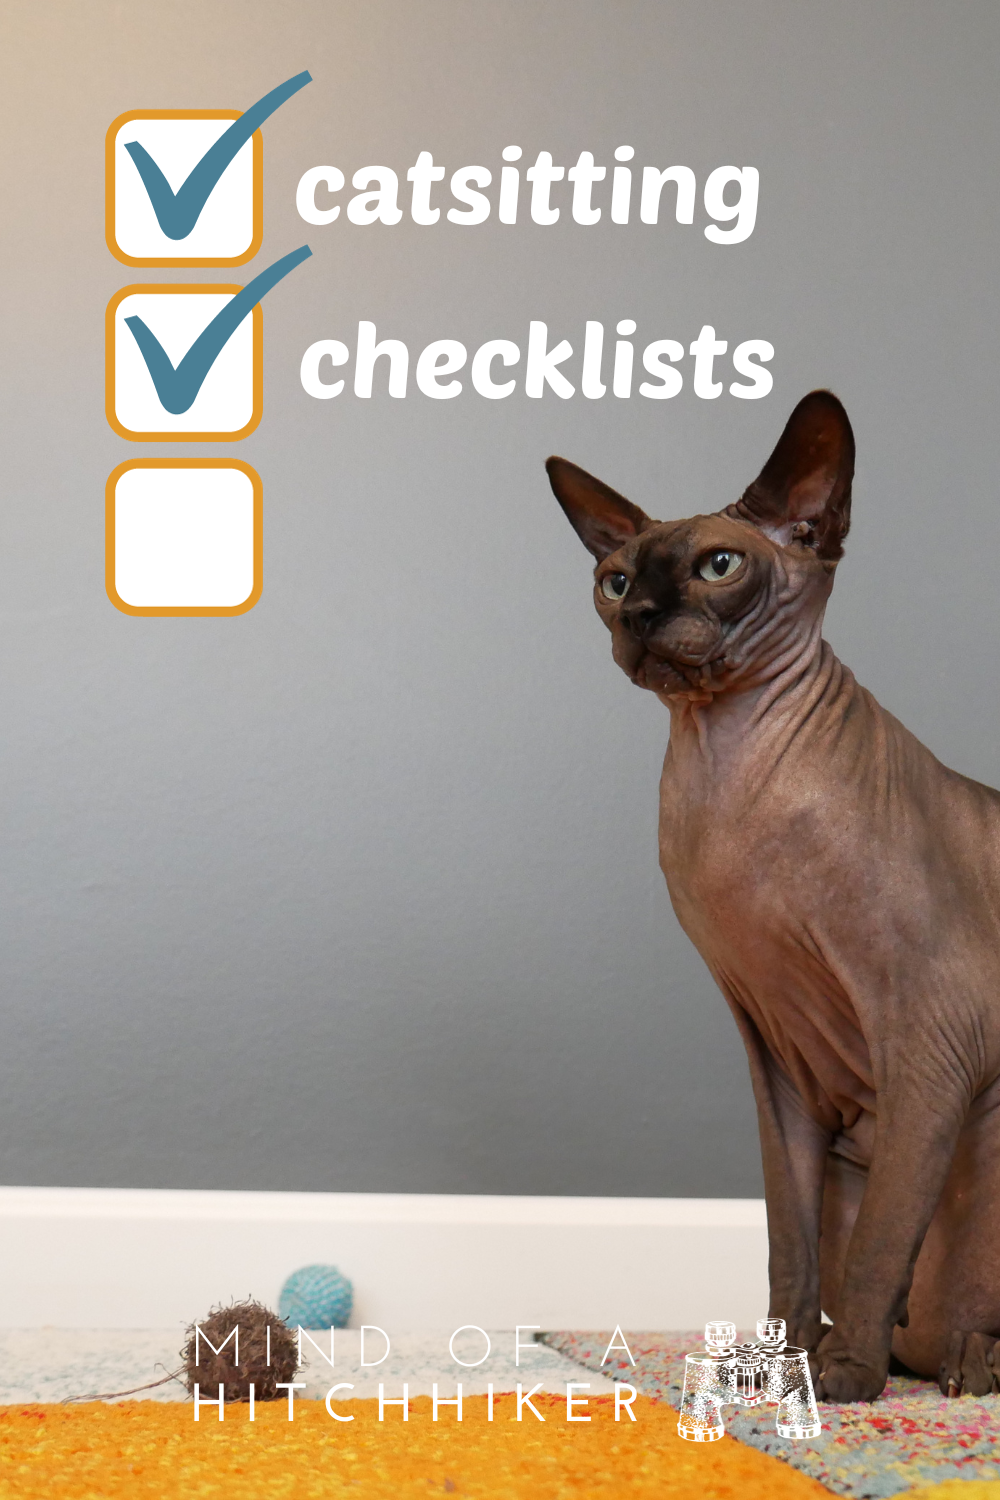 catsitting checklists pin